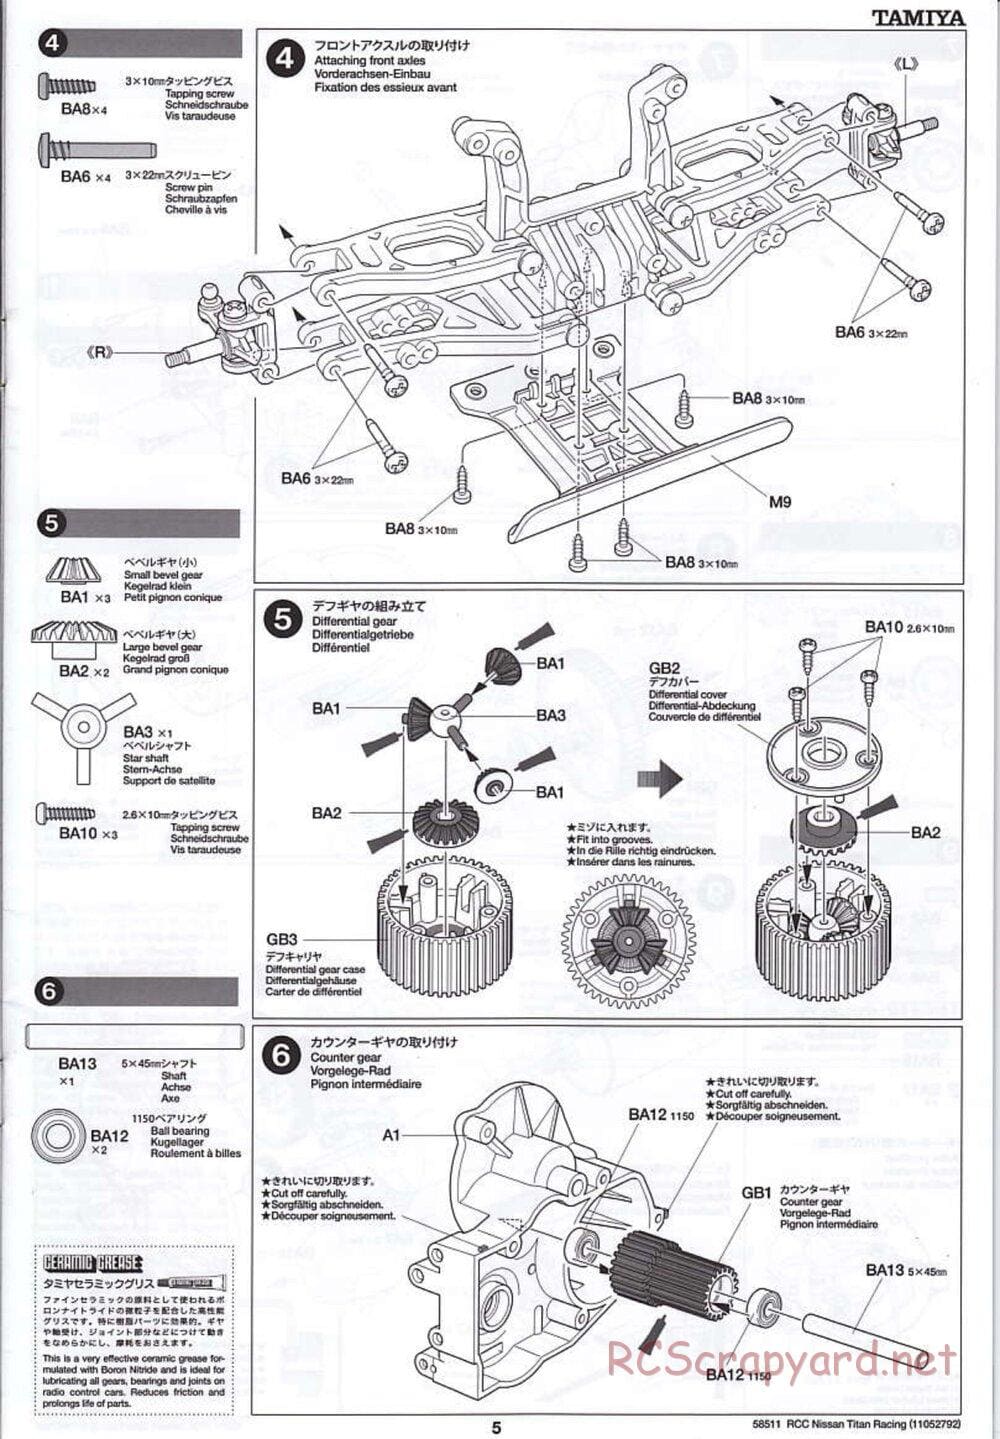 Tamiya - Nissan Titan Chassis - Manual - Page 5